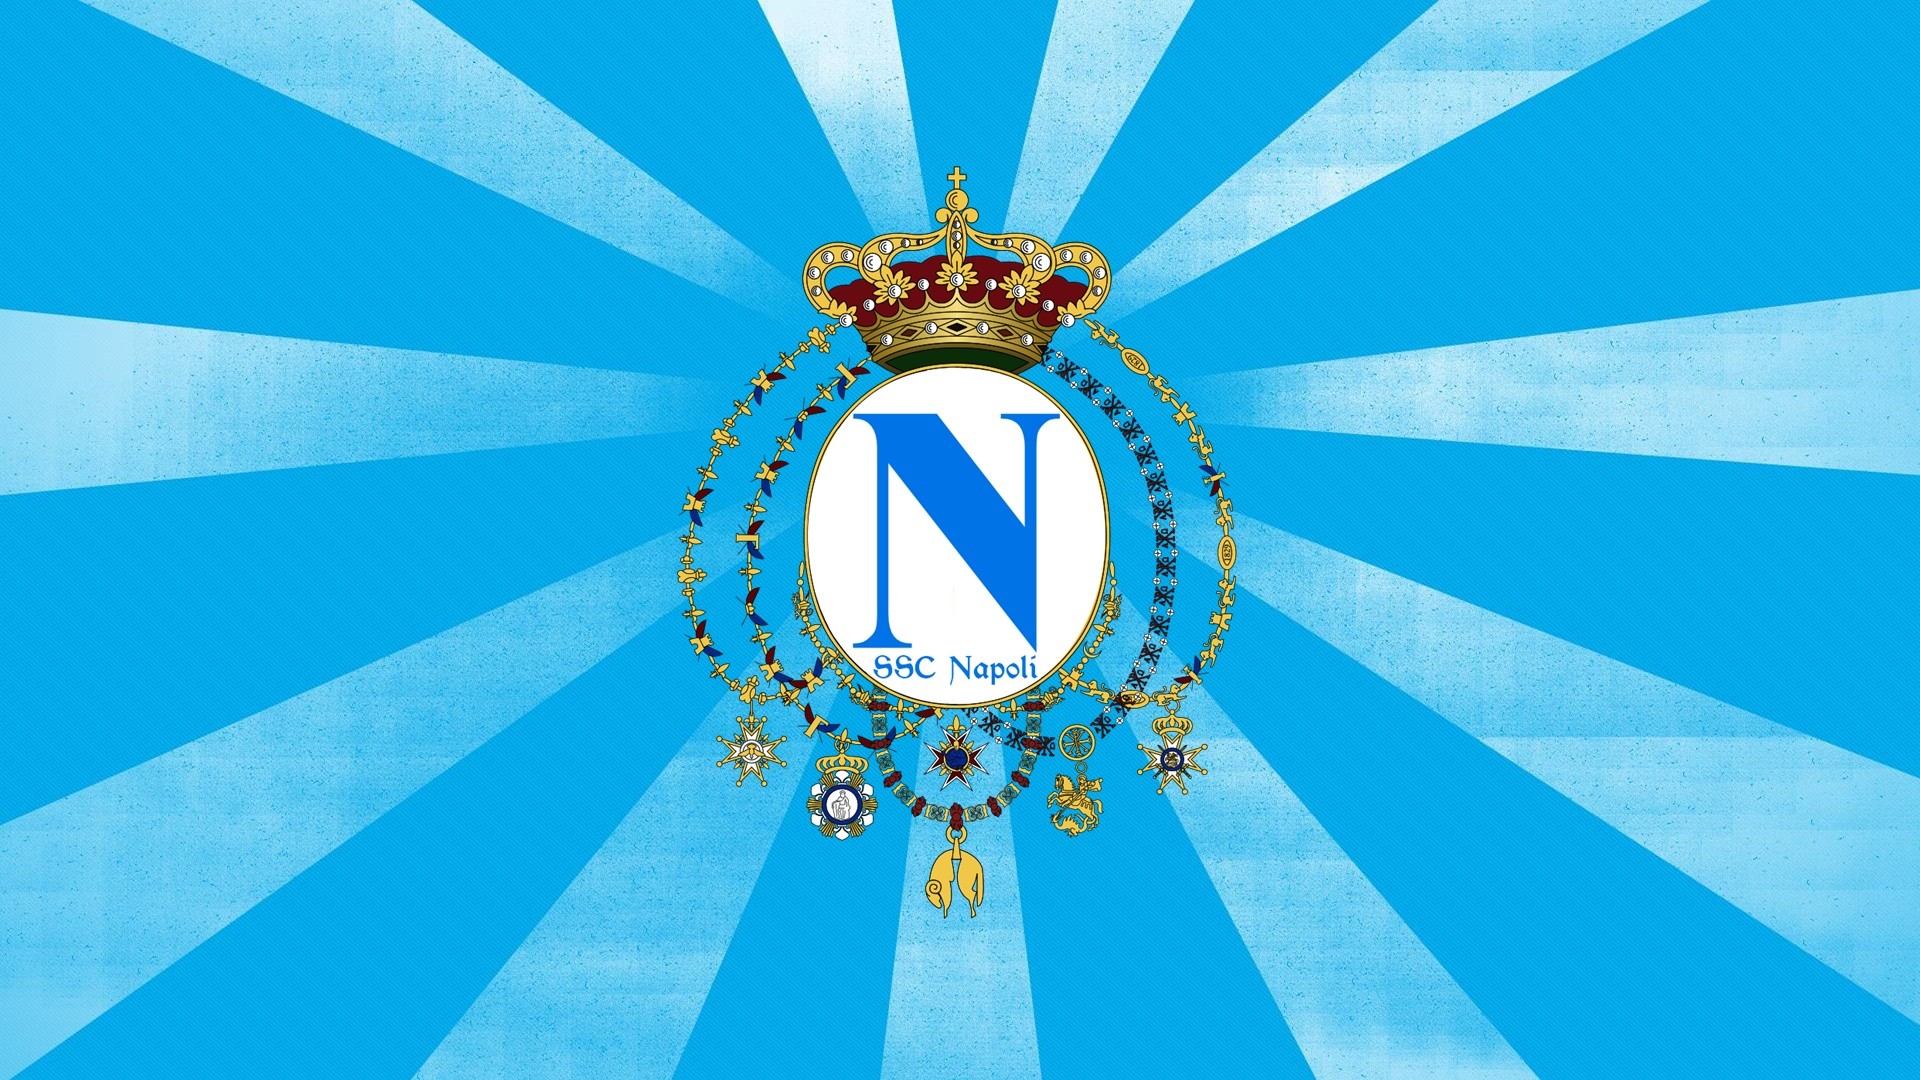 Napoli, Soccer clubs, Crown, Artwork Wallpaper